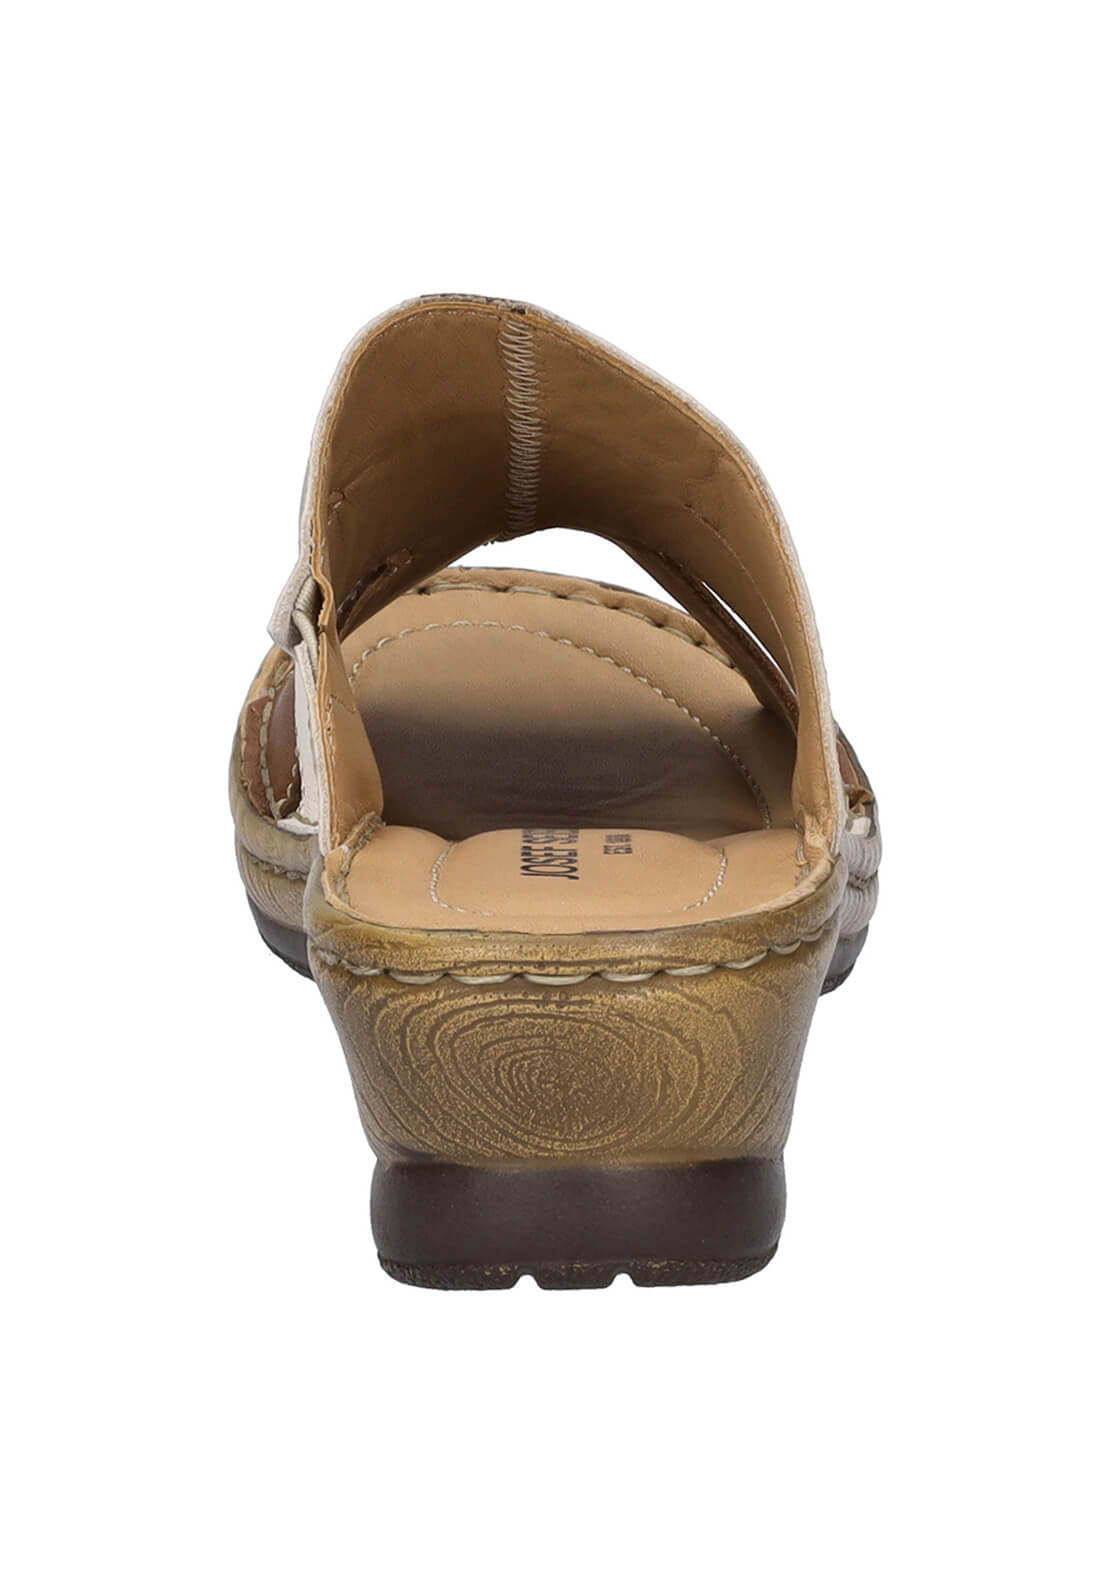 Josef Seibel Catalonia 86 Wedge Sandals - Cognac 7 Shaws Department Stores